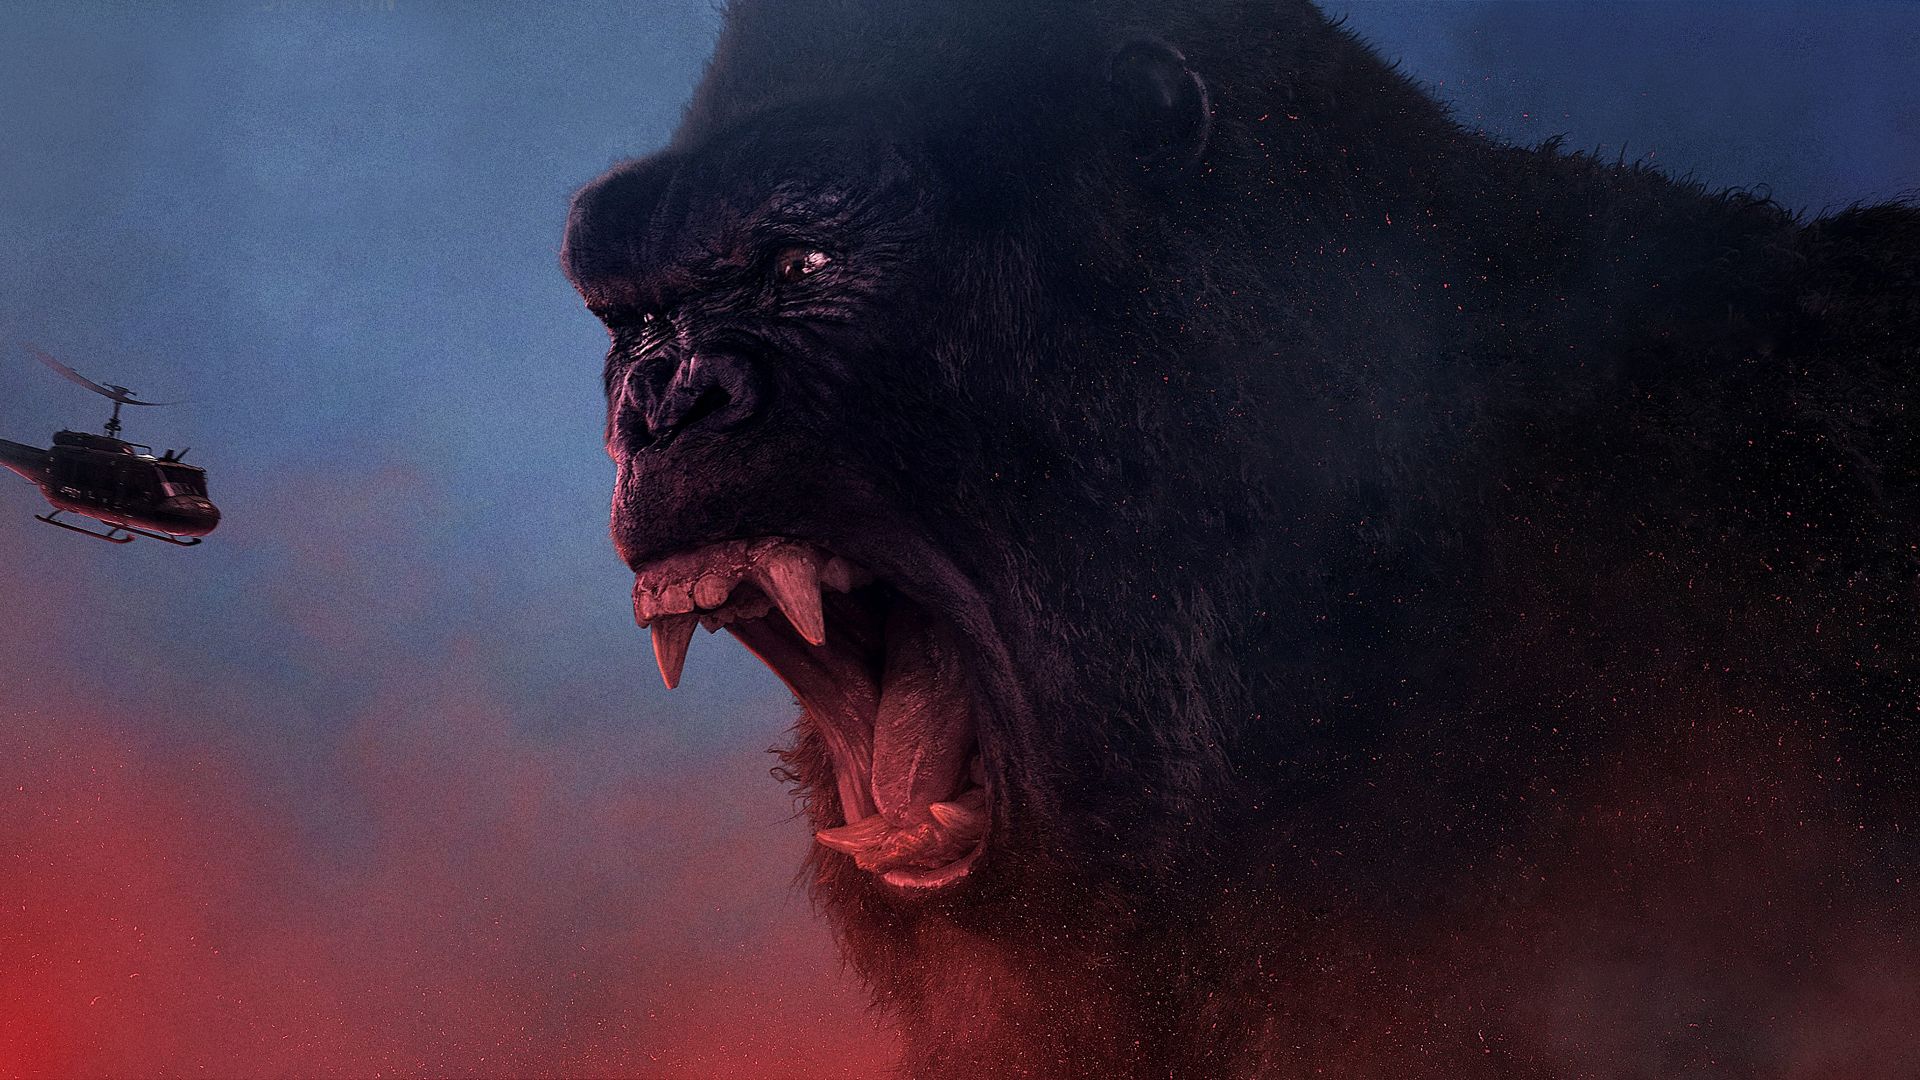 Desktop Wallpaper Kong Skull Island 107 Movie Big Gorilla Hd Image Picture Background Itz1wu